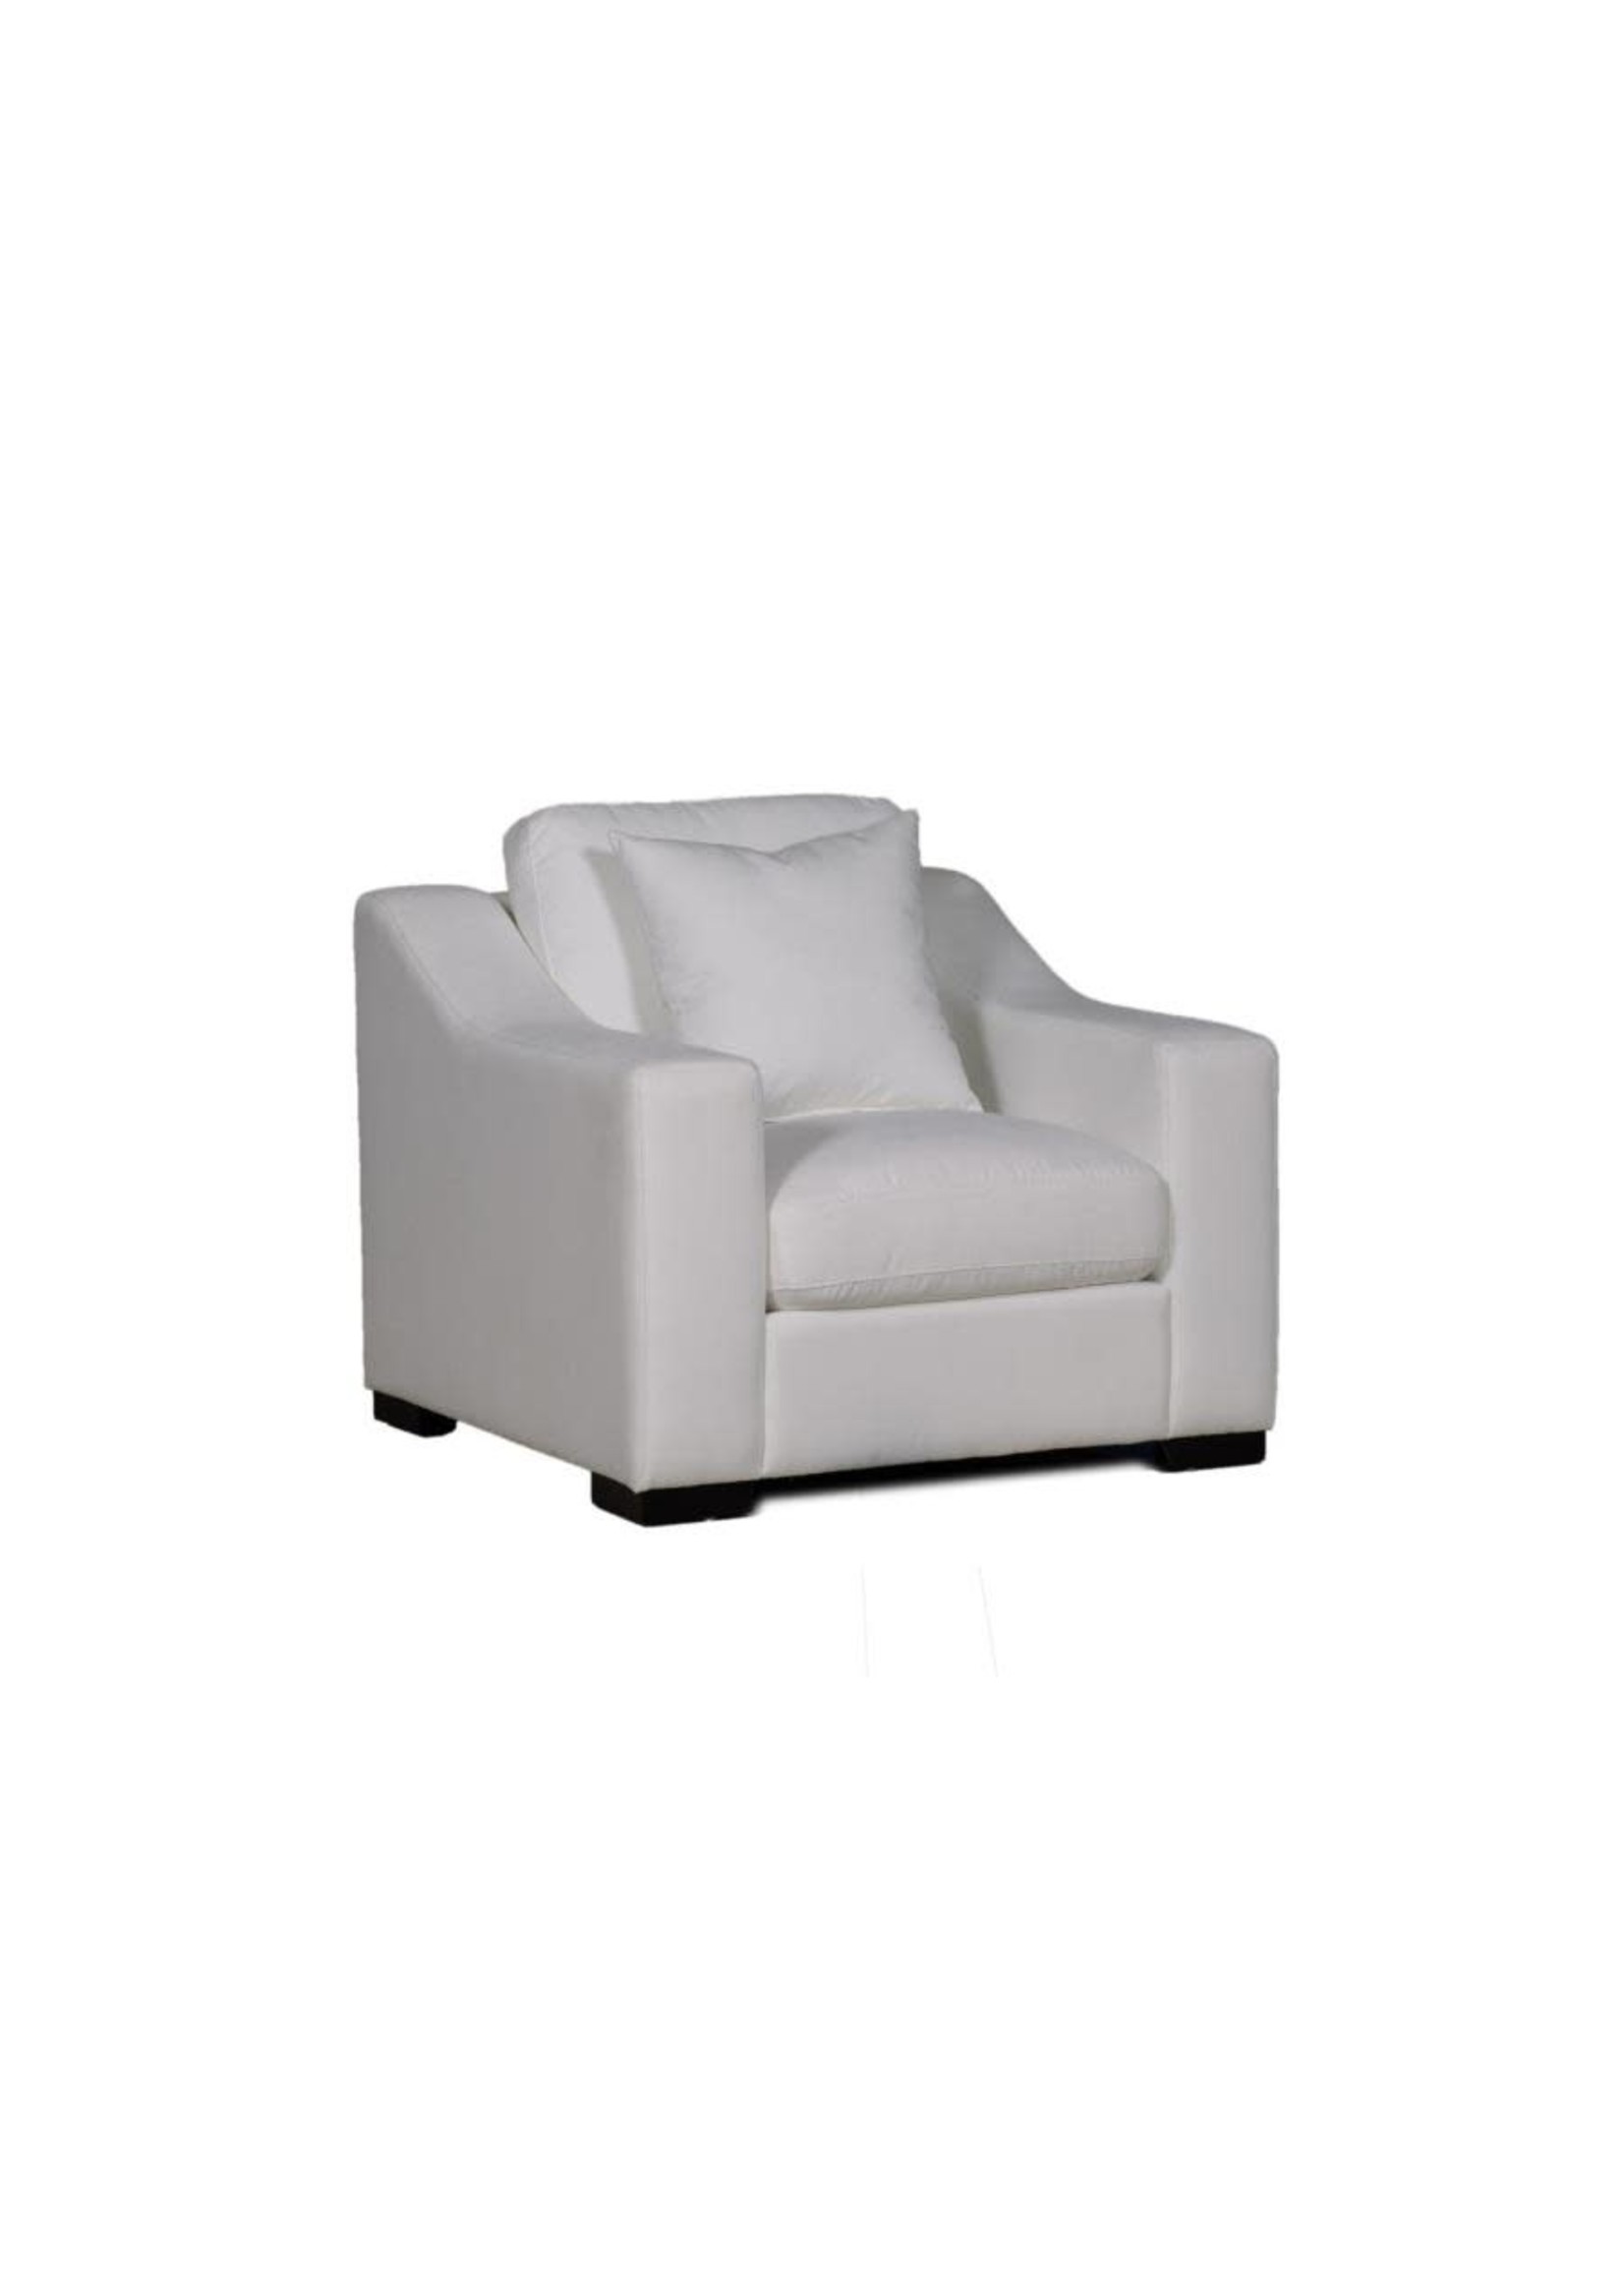 Coaster Furniture 509893 Chair White